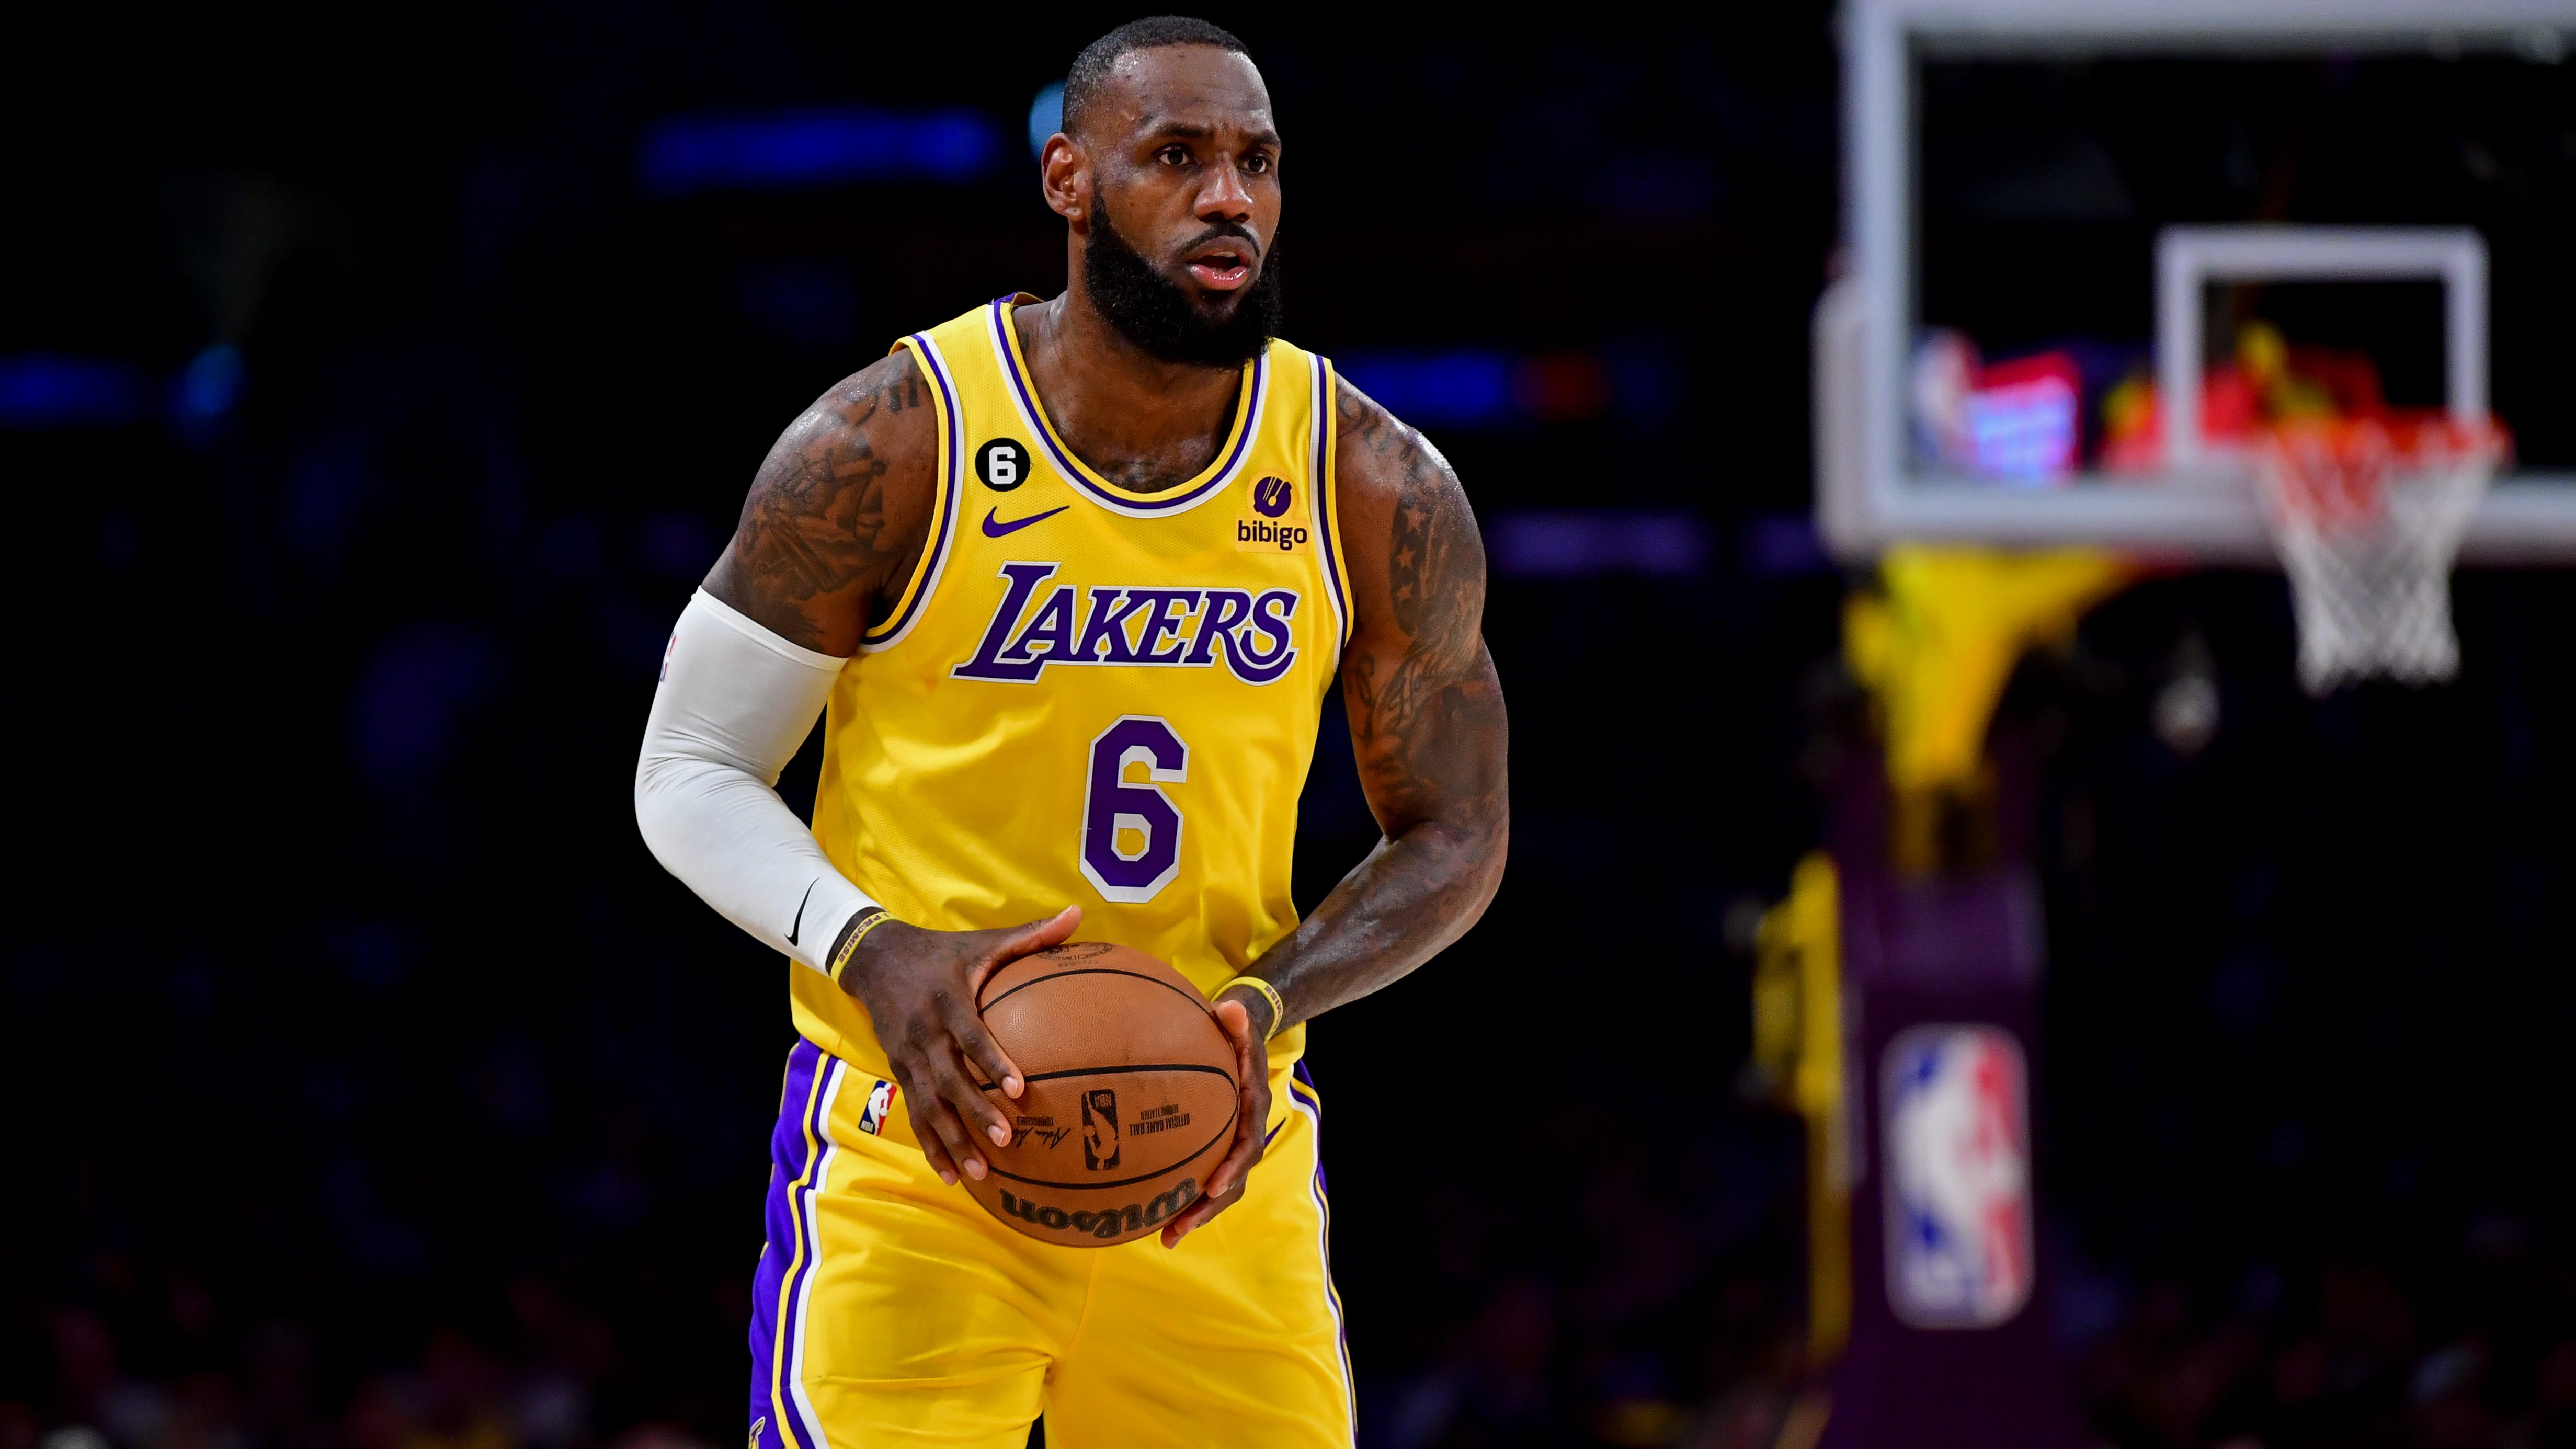 Lakers forward LeBron James, 38, has played 20 seasons in the NBA.